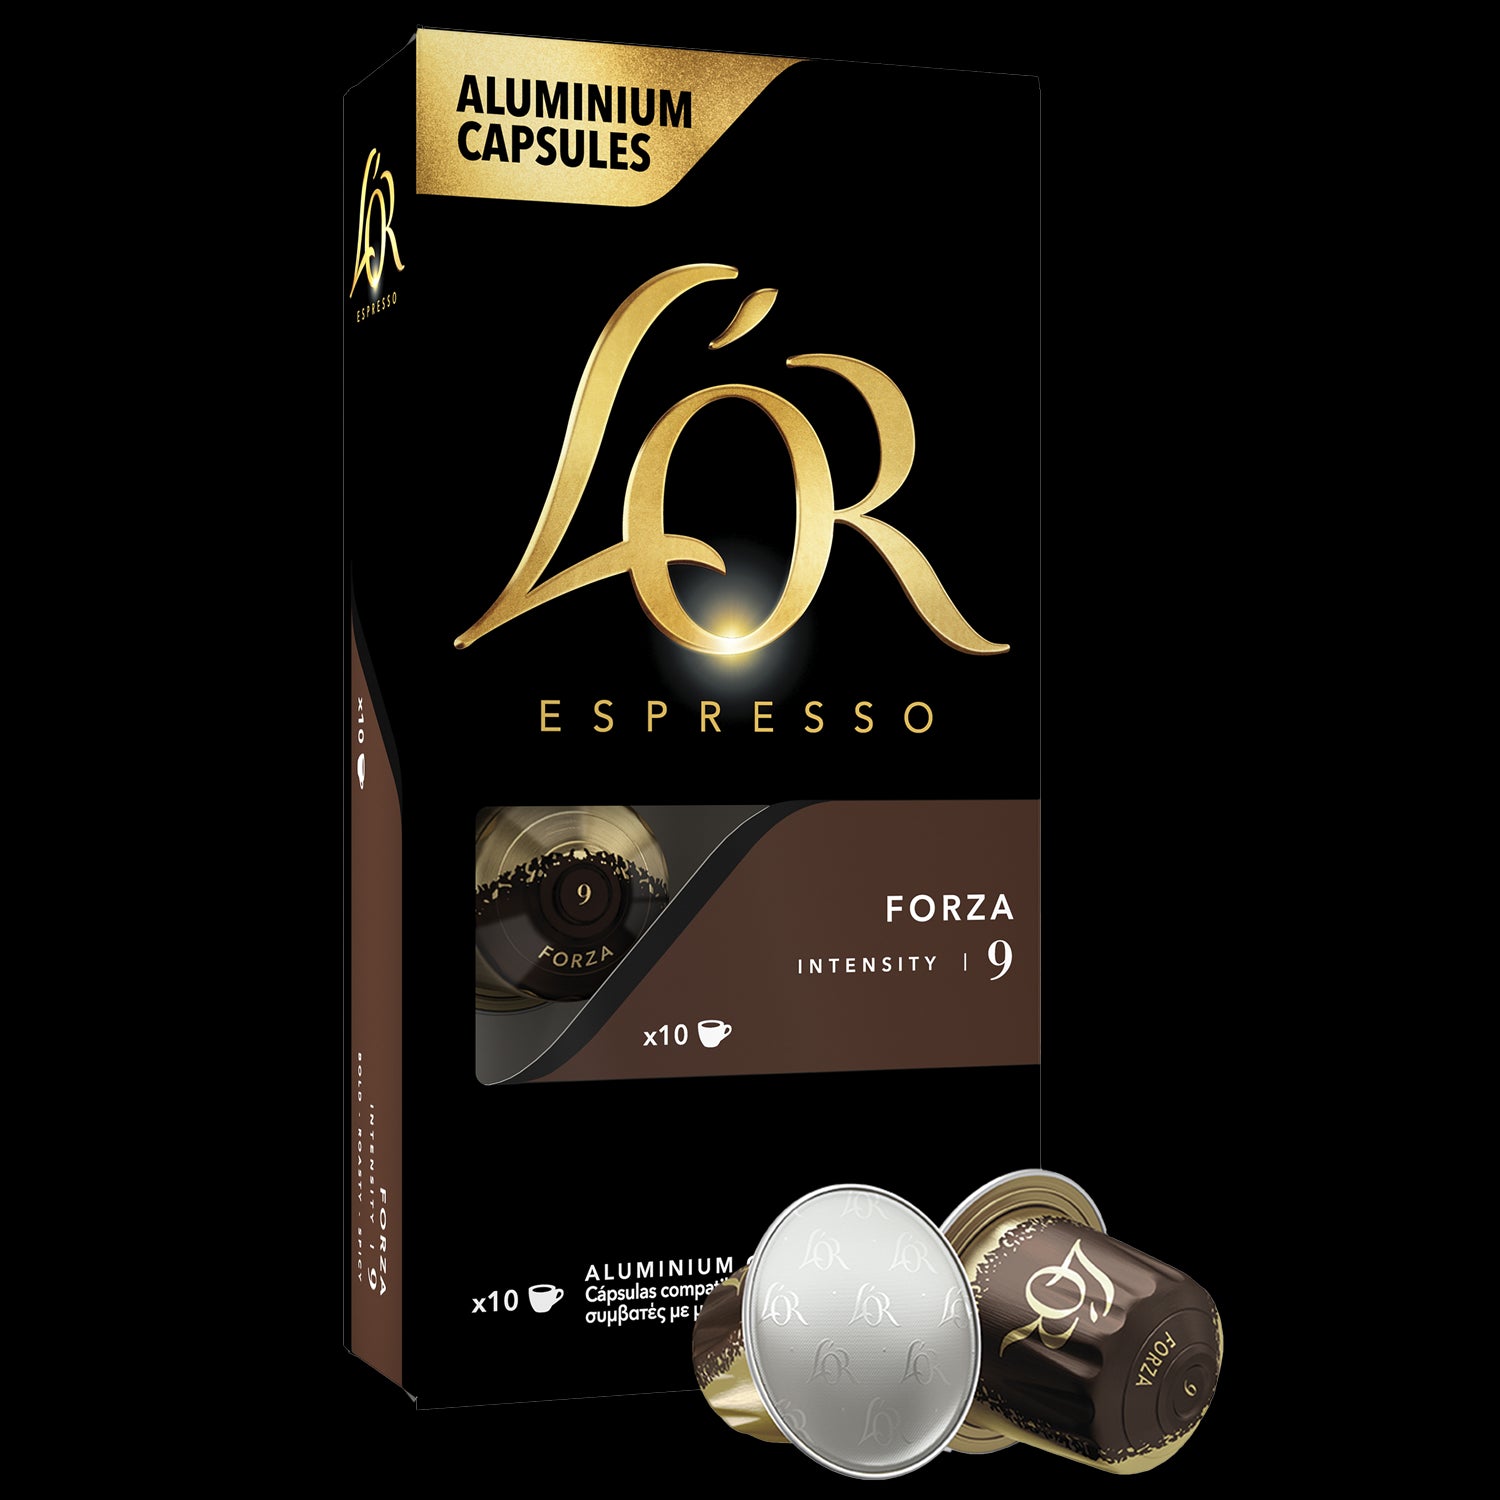 Boite de 50 capsules de café L'OR Espresso Forza - Café en dosettes